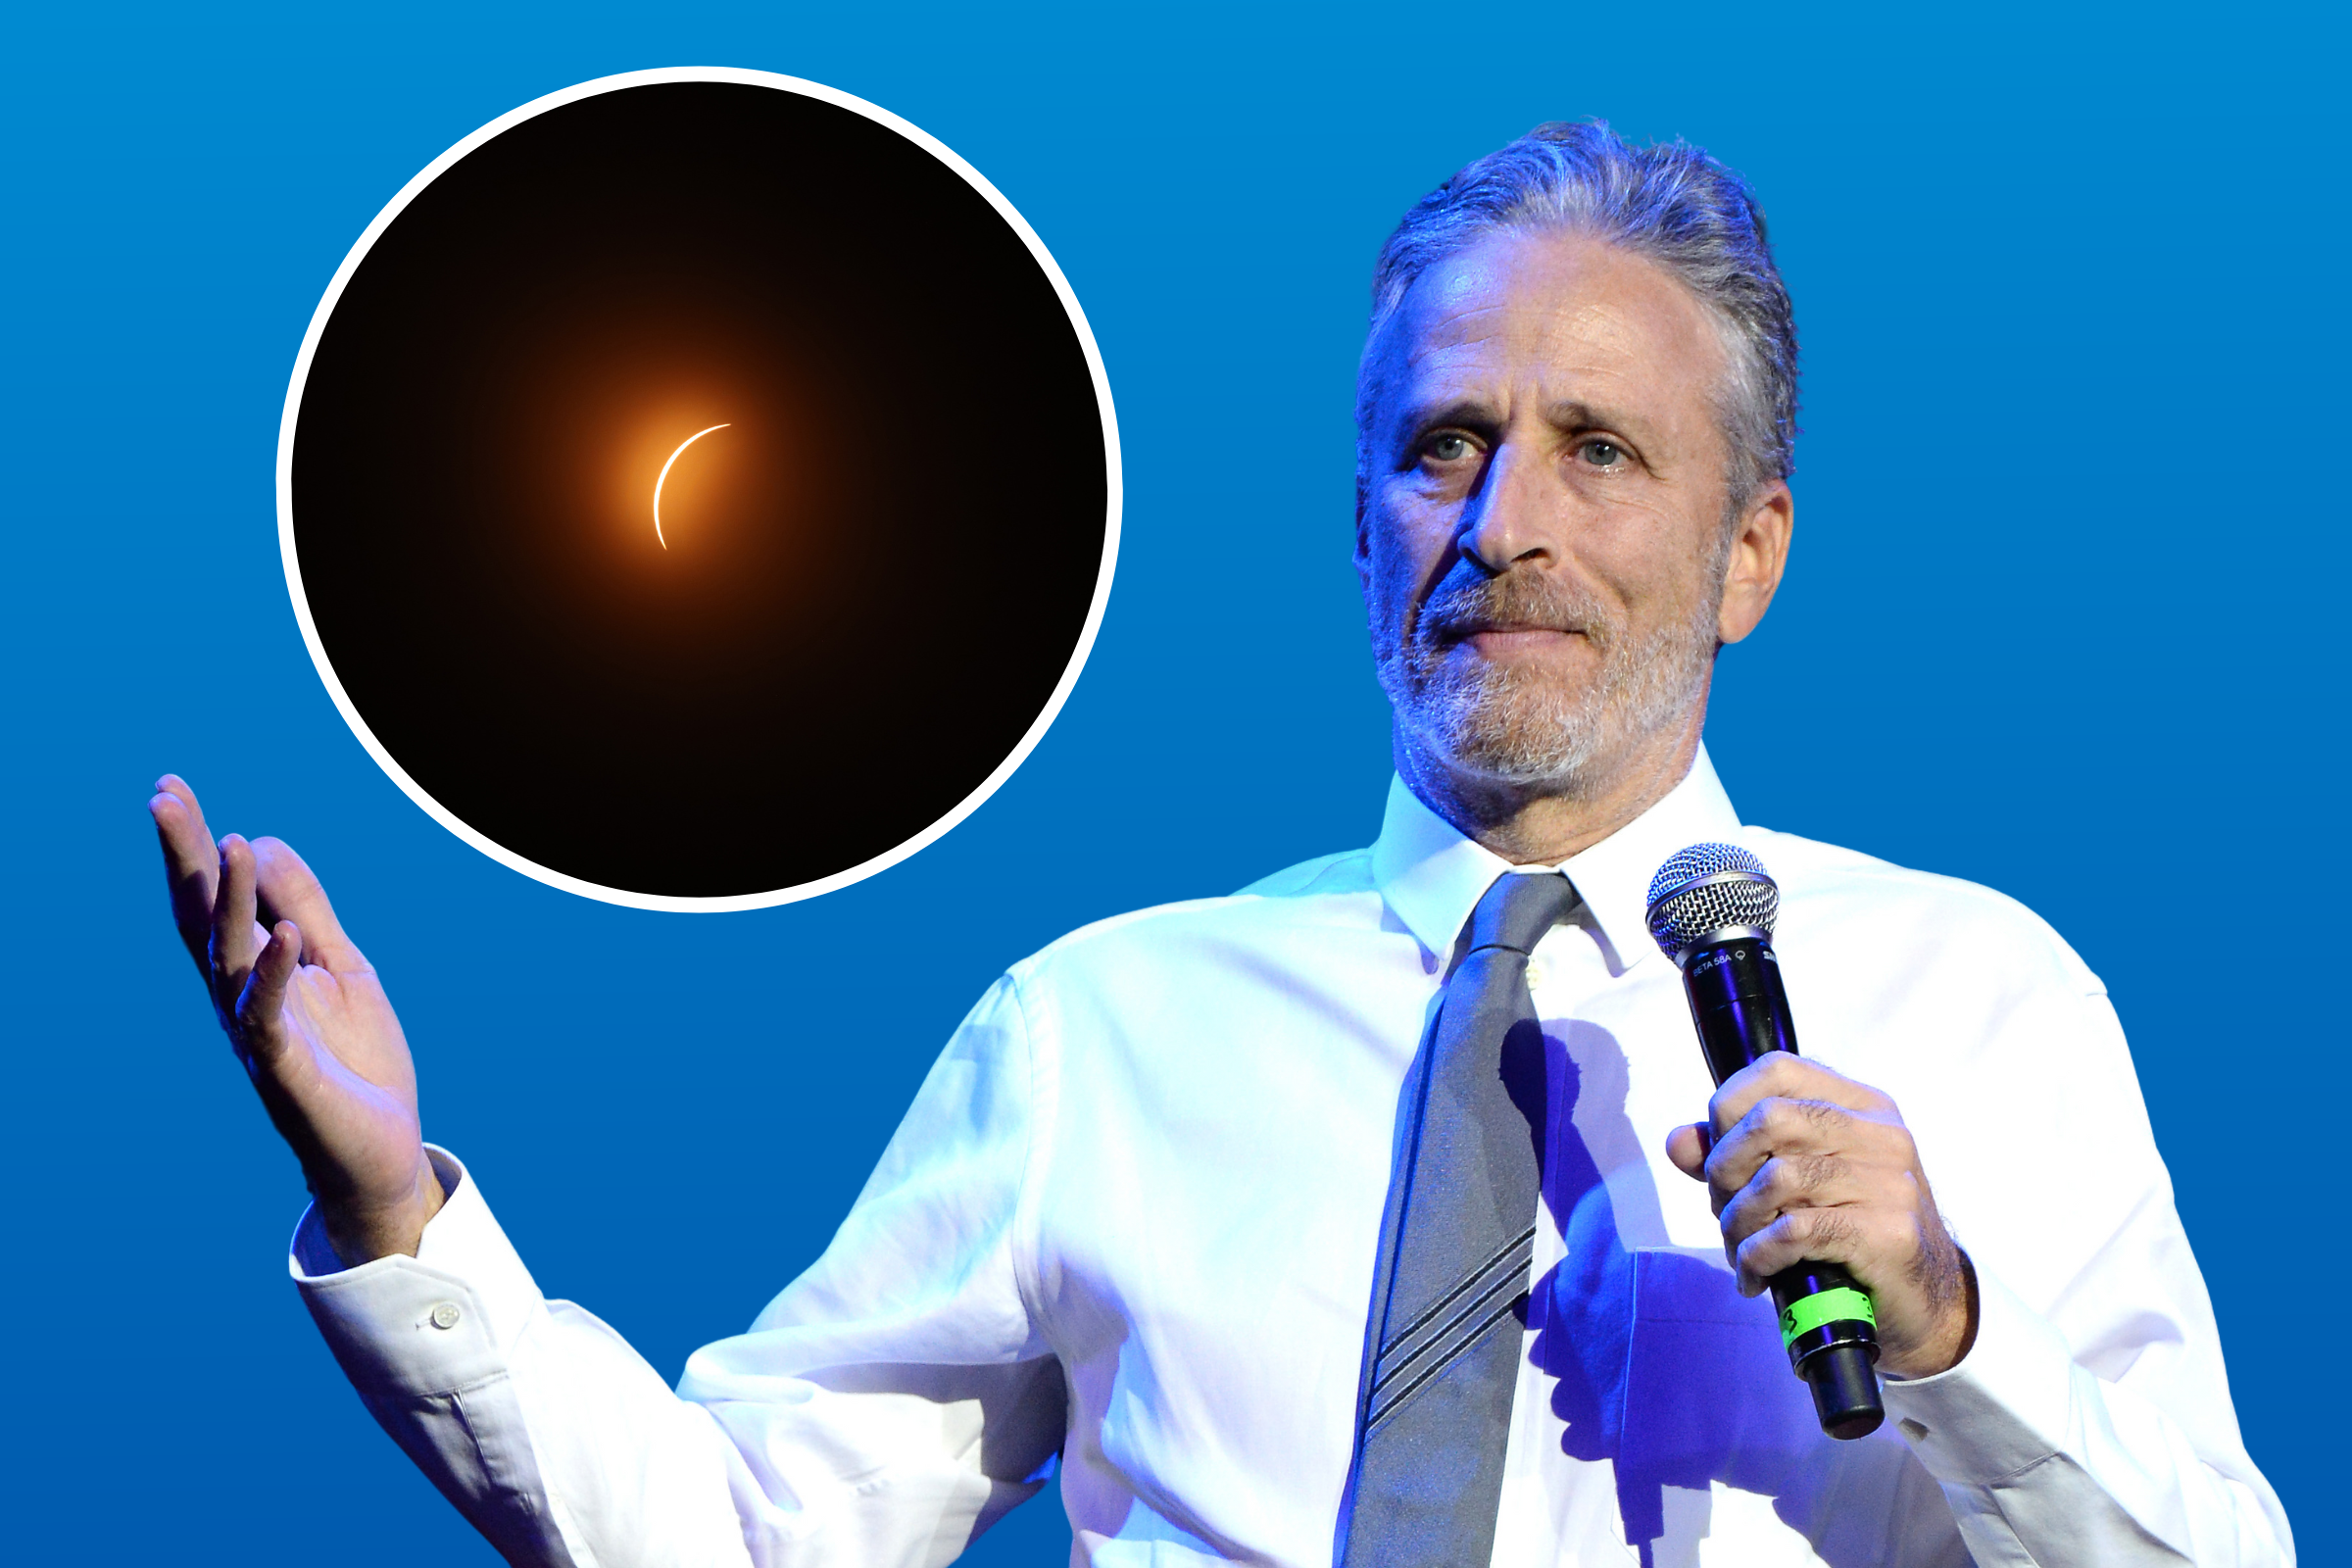 Jon Stewart mocks Fox News response to eclipse